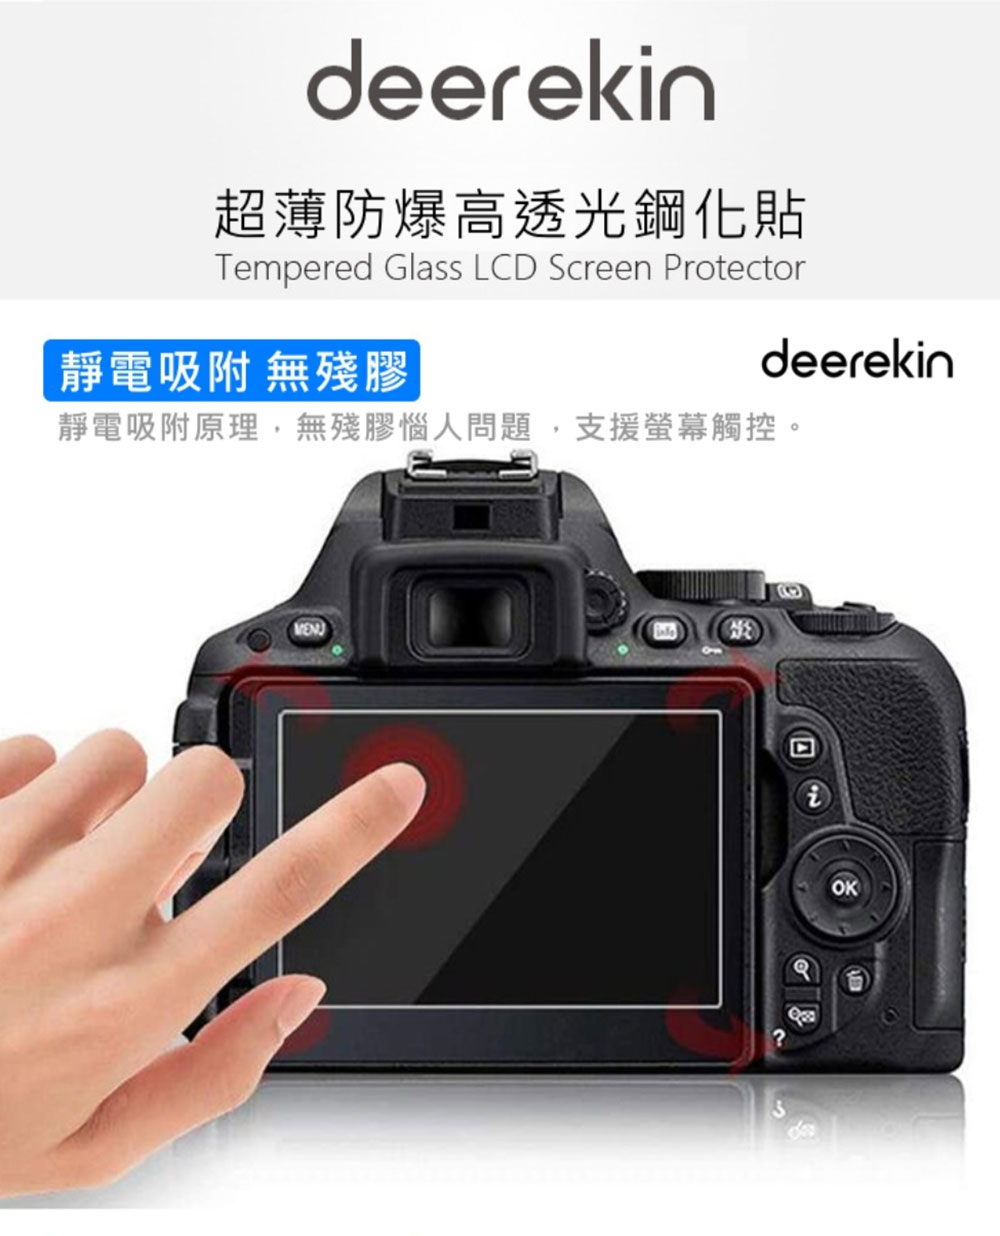 deerekin 超薄防爆 相機鋼化貼(For Canon 